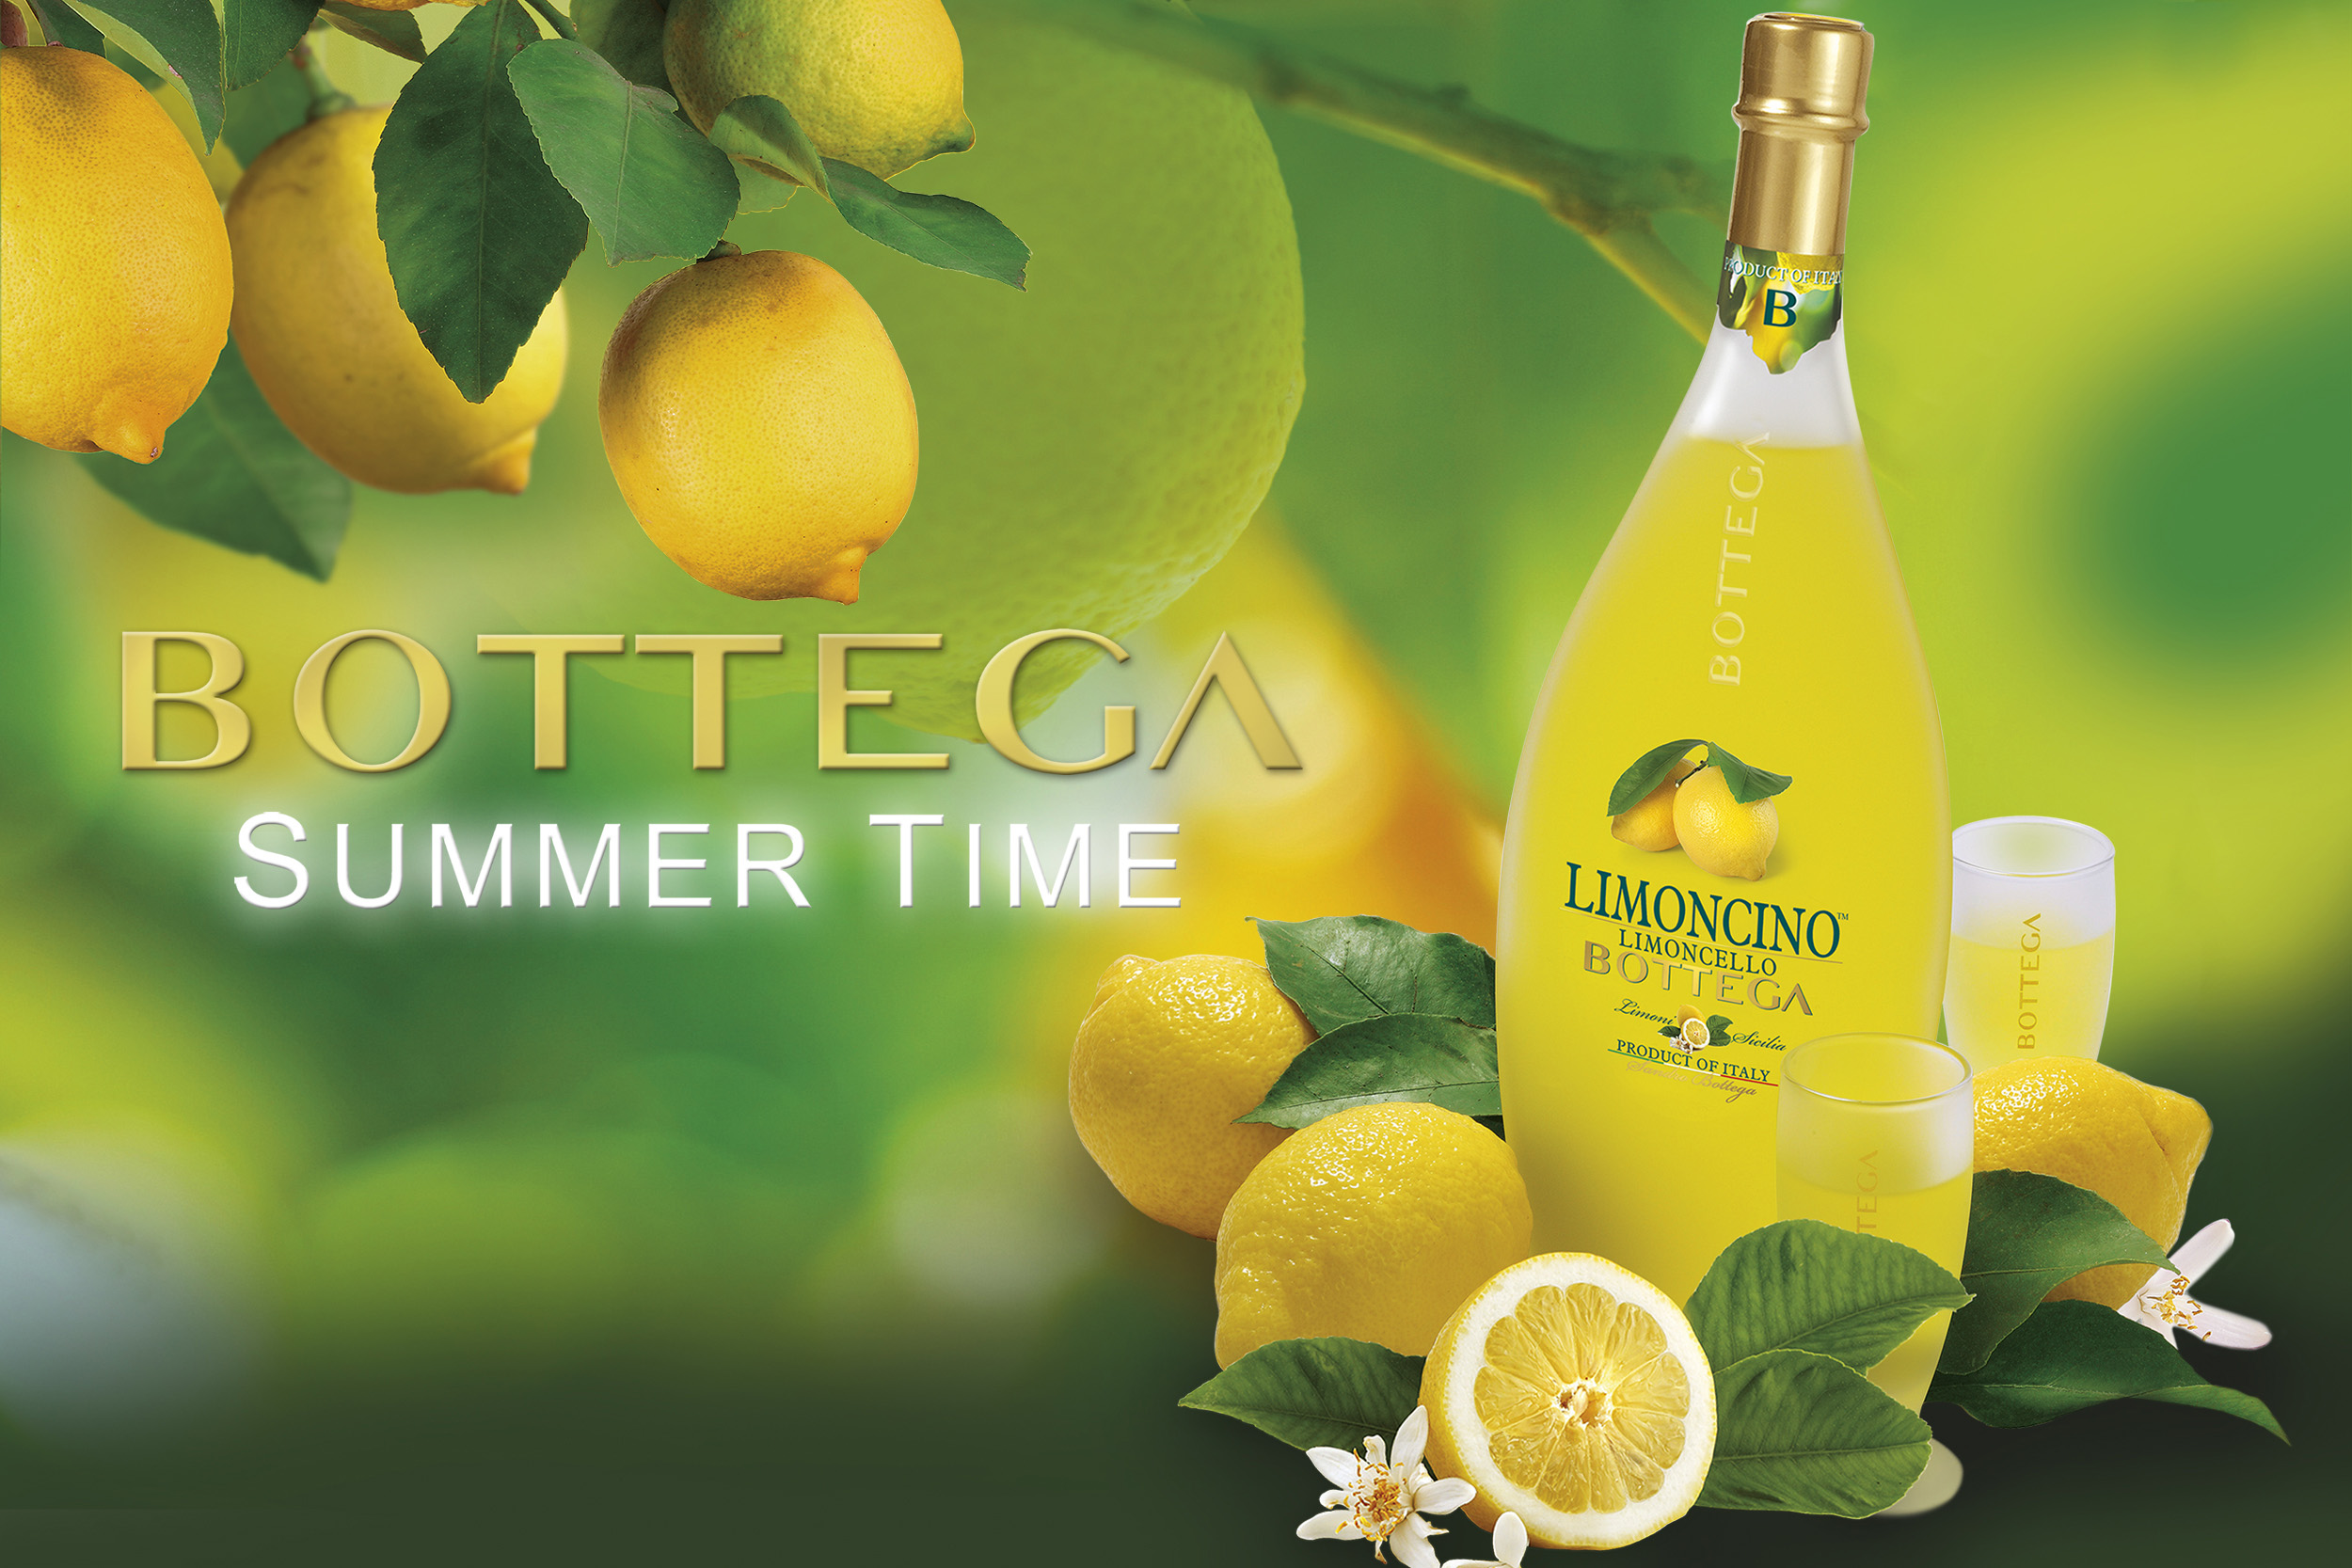 Bottega Summer Time Limoncino - Estate 2020